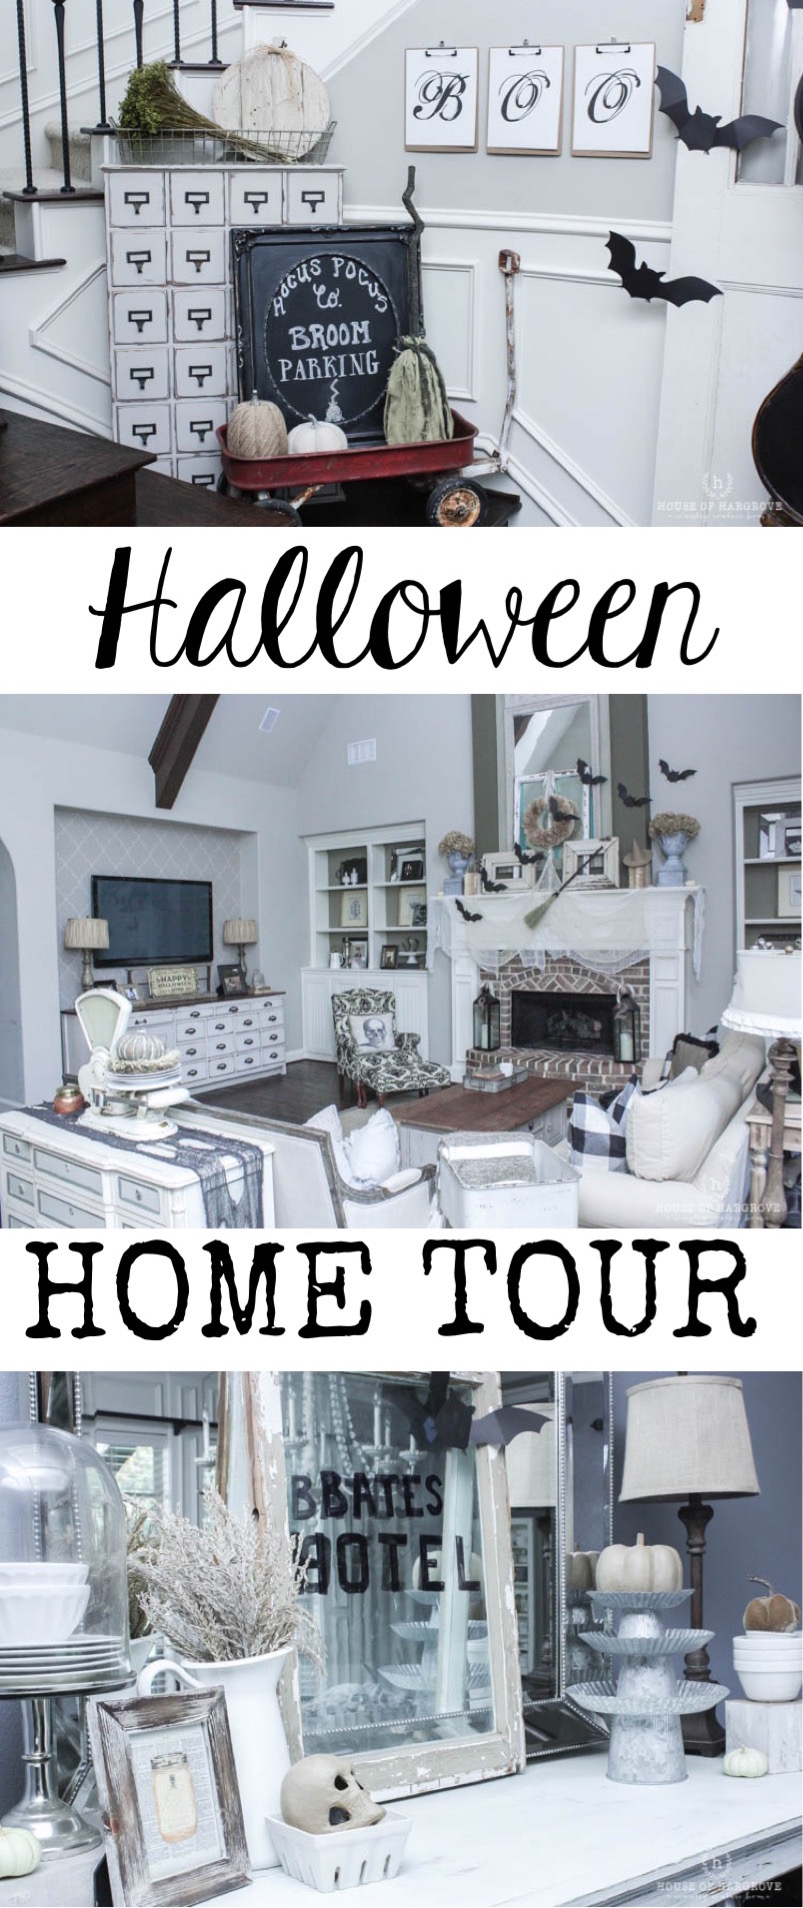  Halloween Home Tour 2019 Haunted House of Hargrove